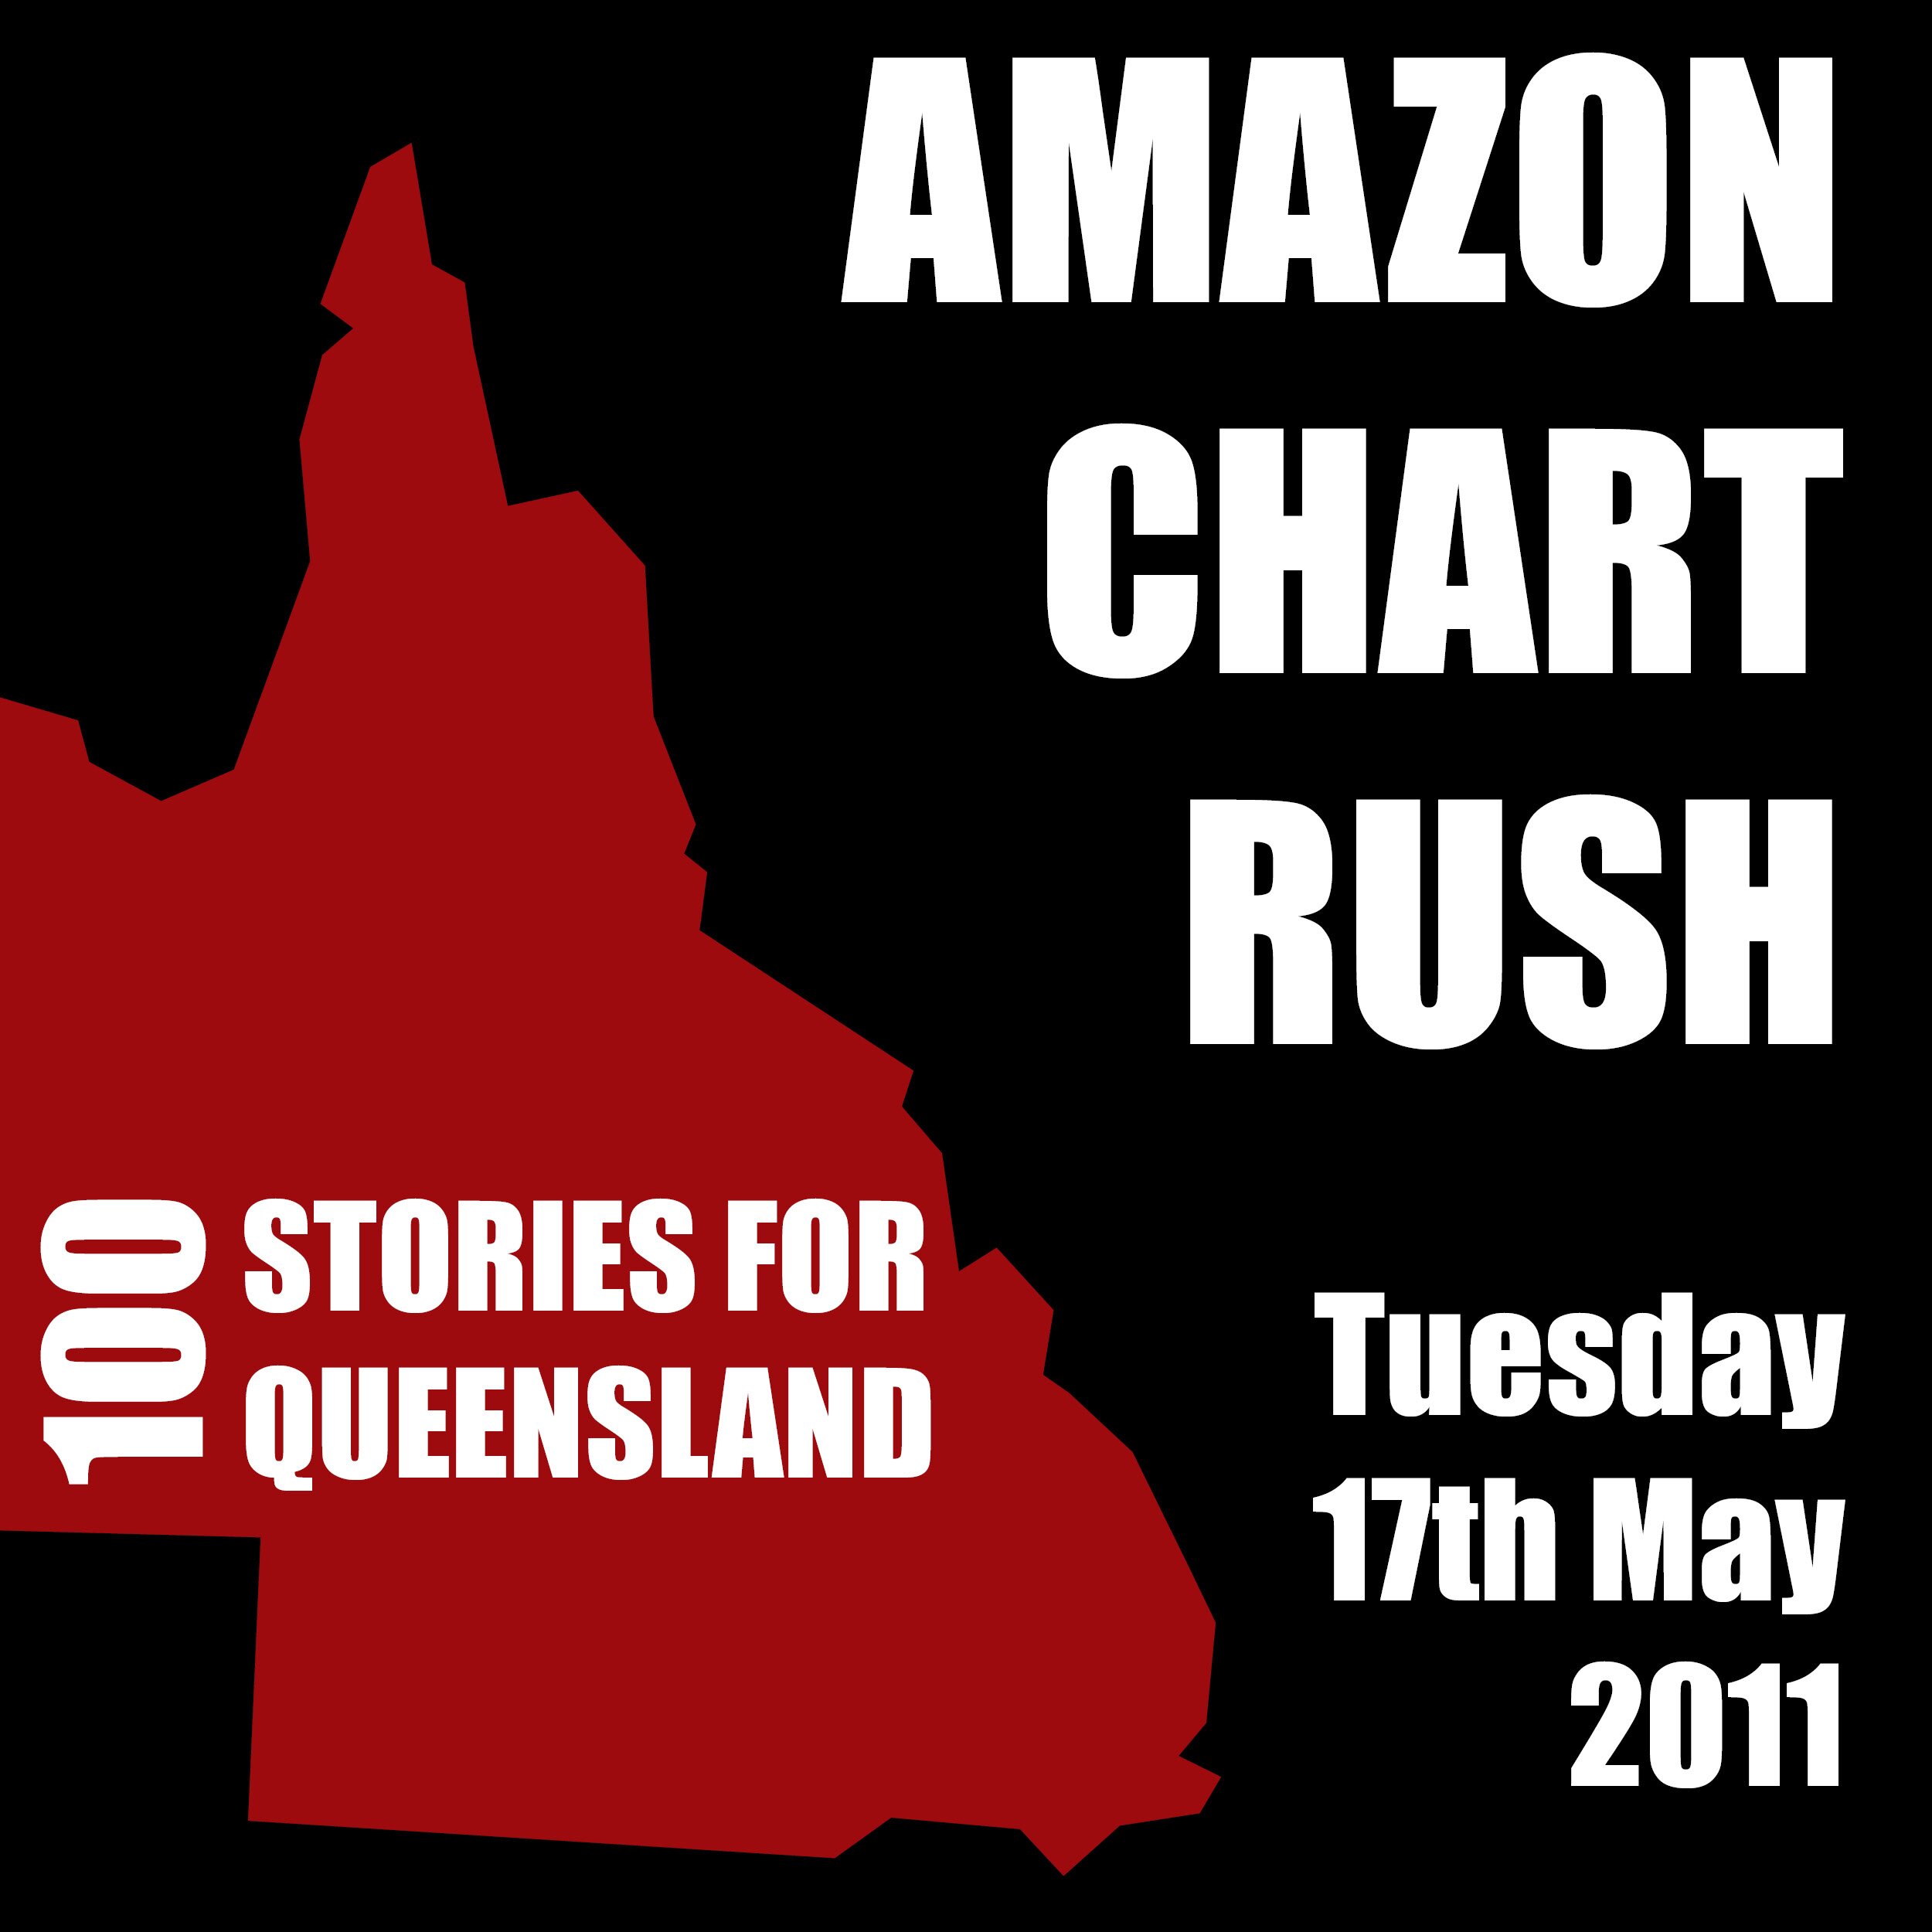 Paperback Launch and Amazon Chart Rush